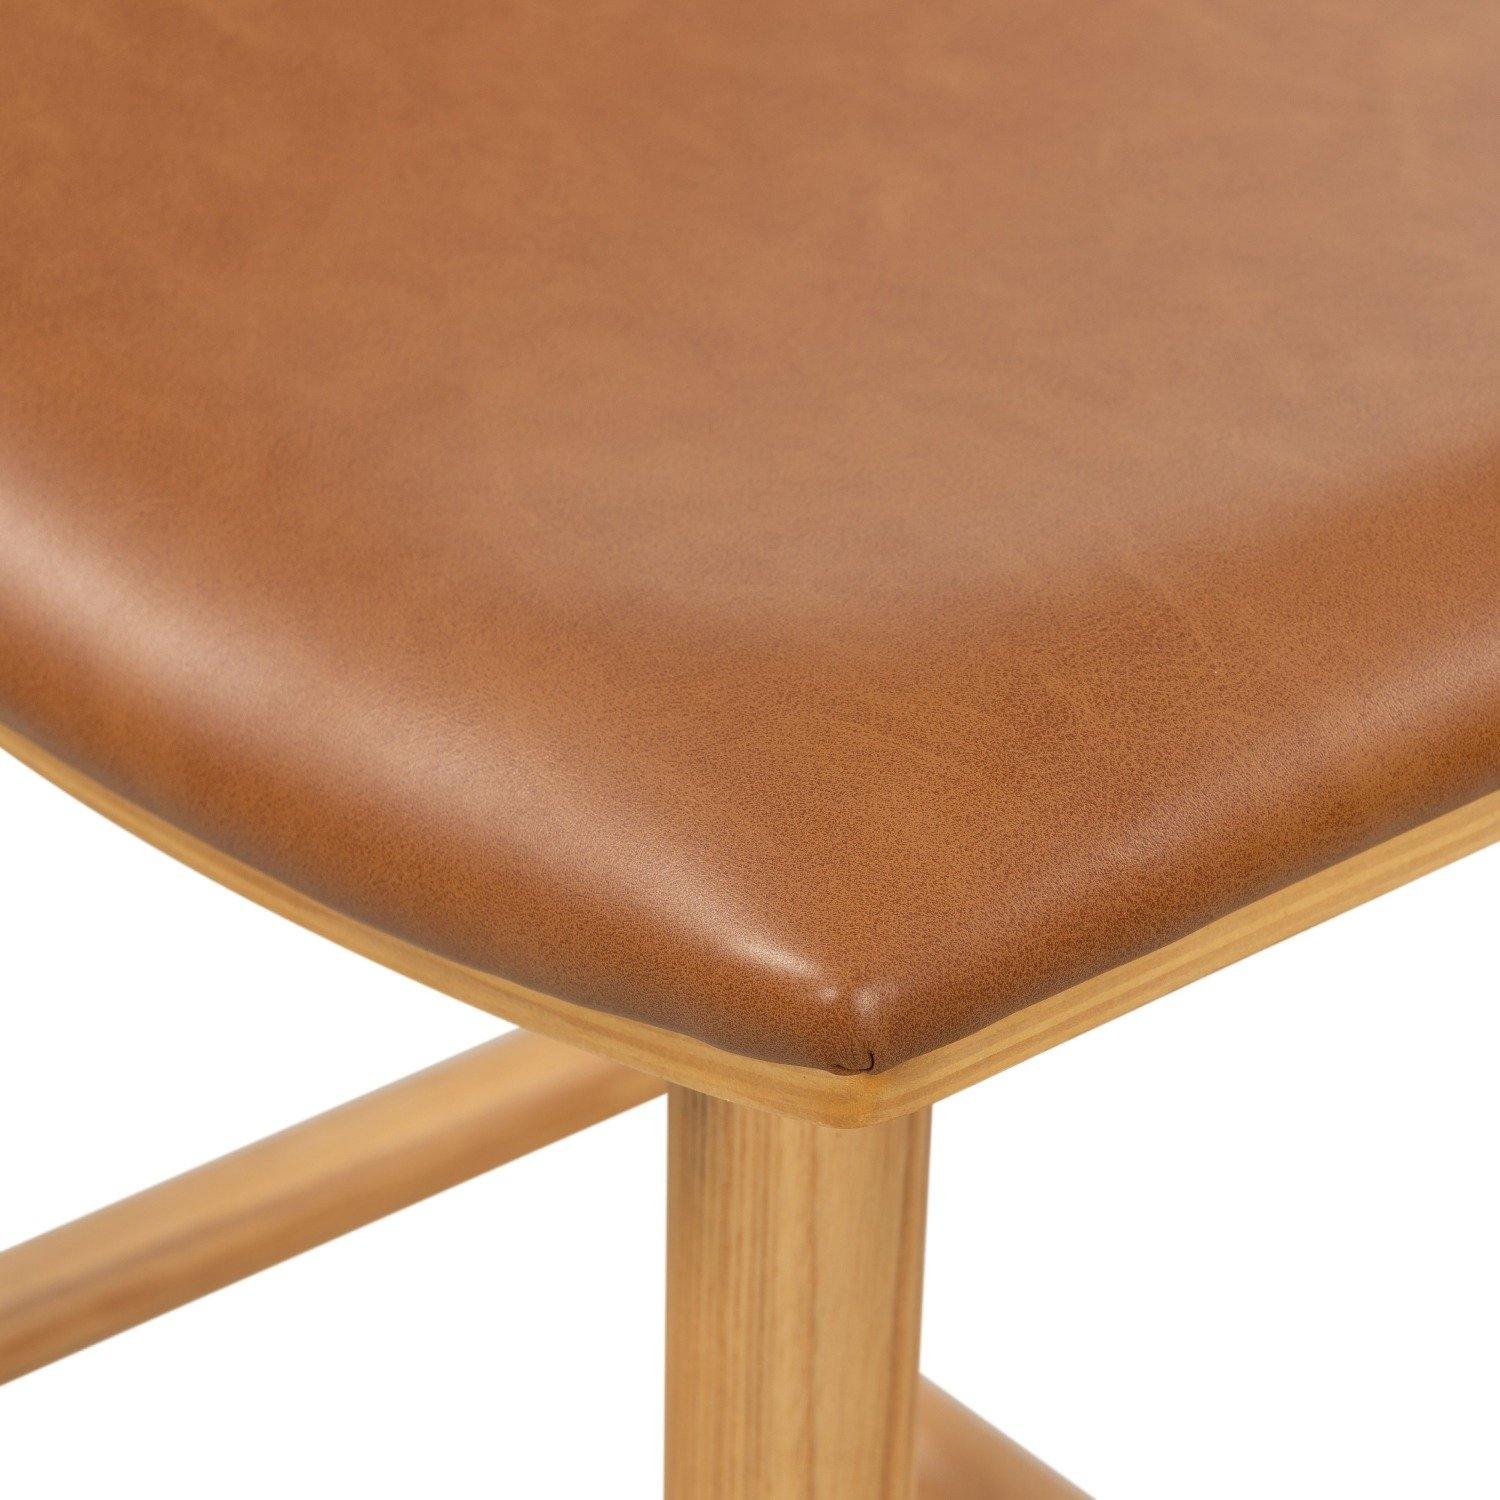 UNION DINING STOOL, BUTTERSCOTCH - Reimagine Designs - new, stool